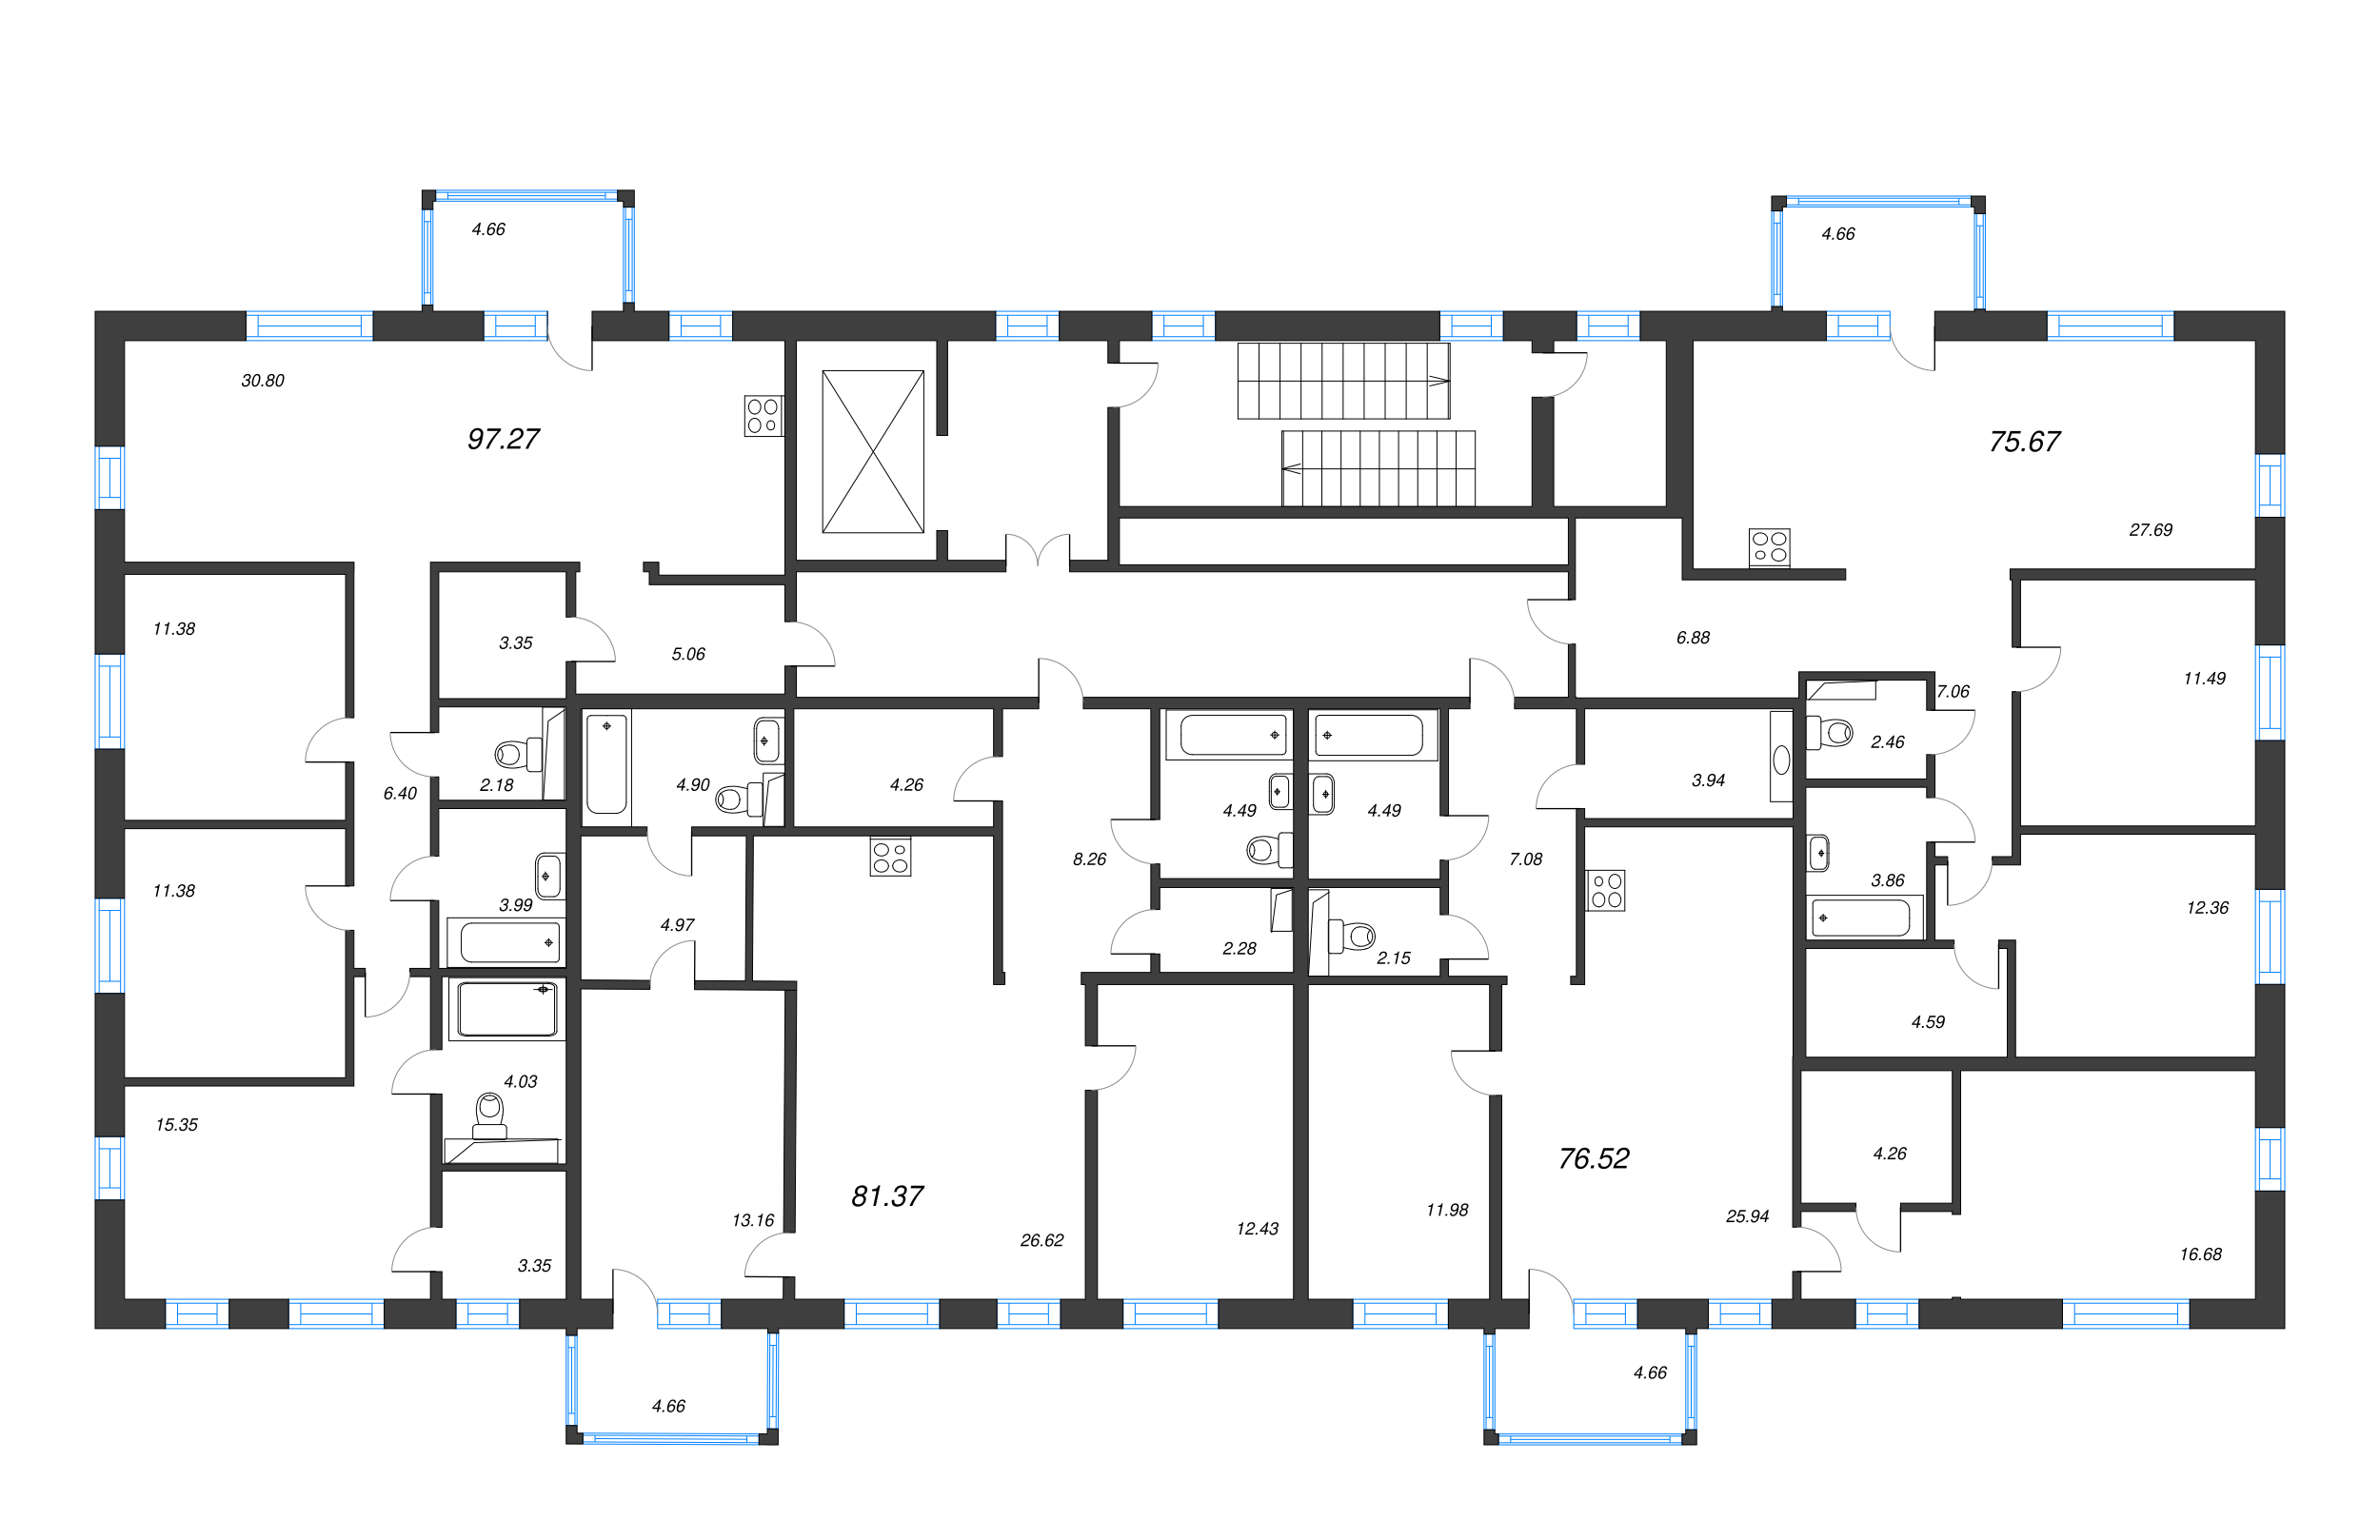 3-комнатная (Евро) квартира, 75.67 м² - планировка этажа